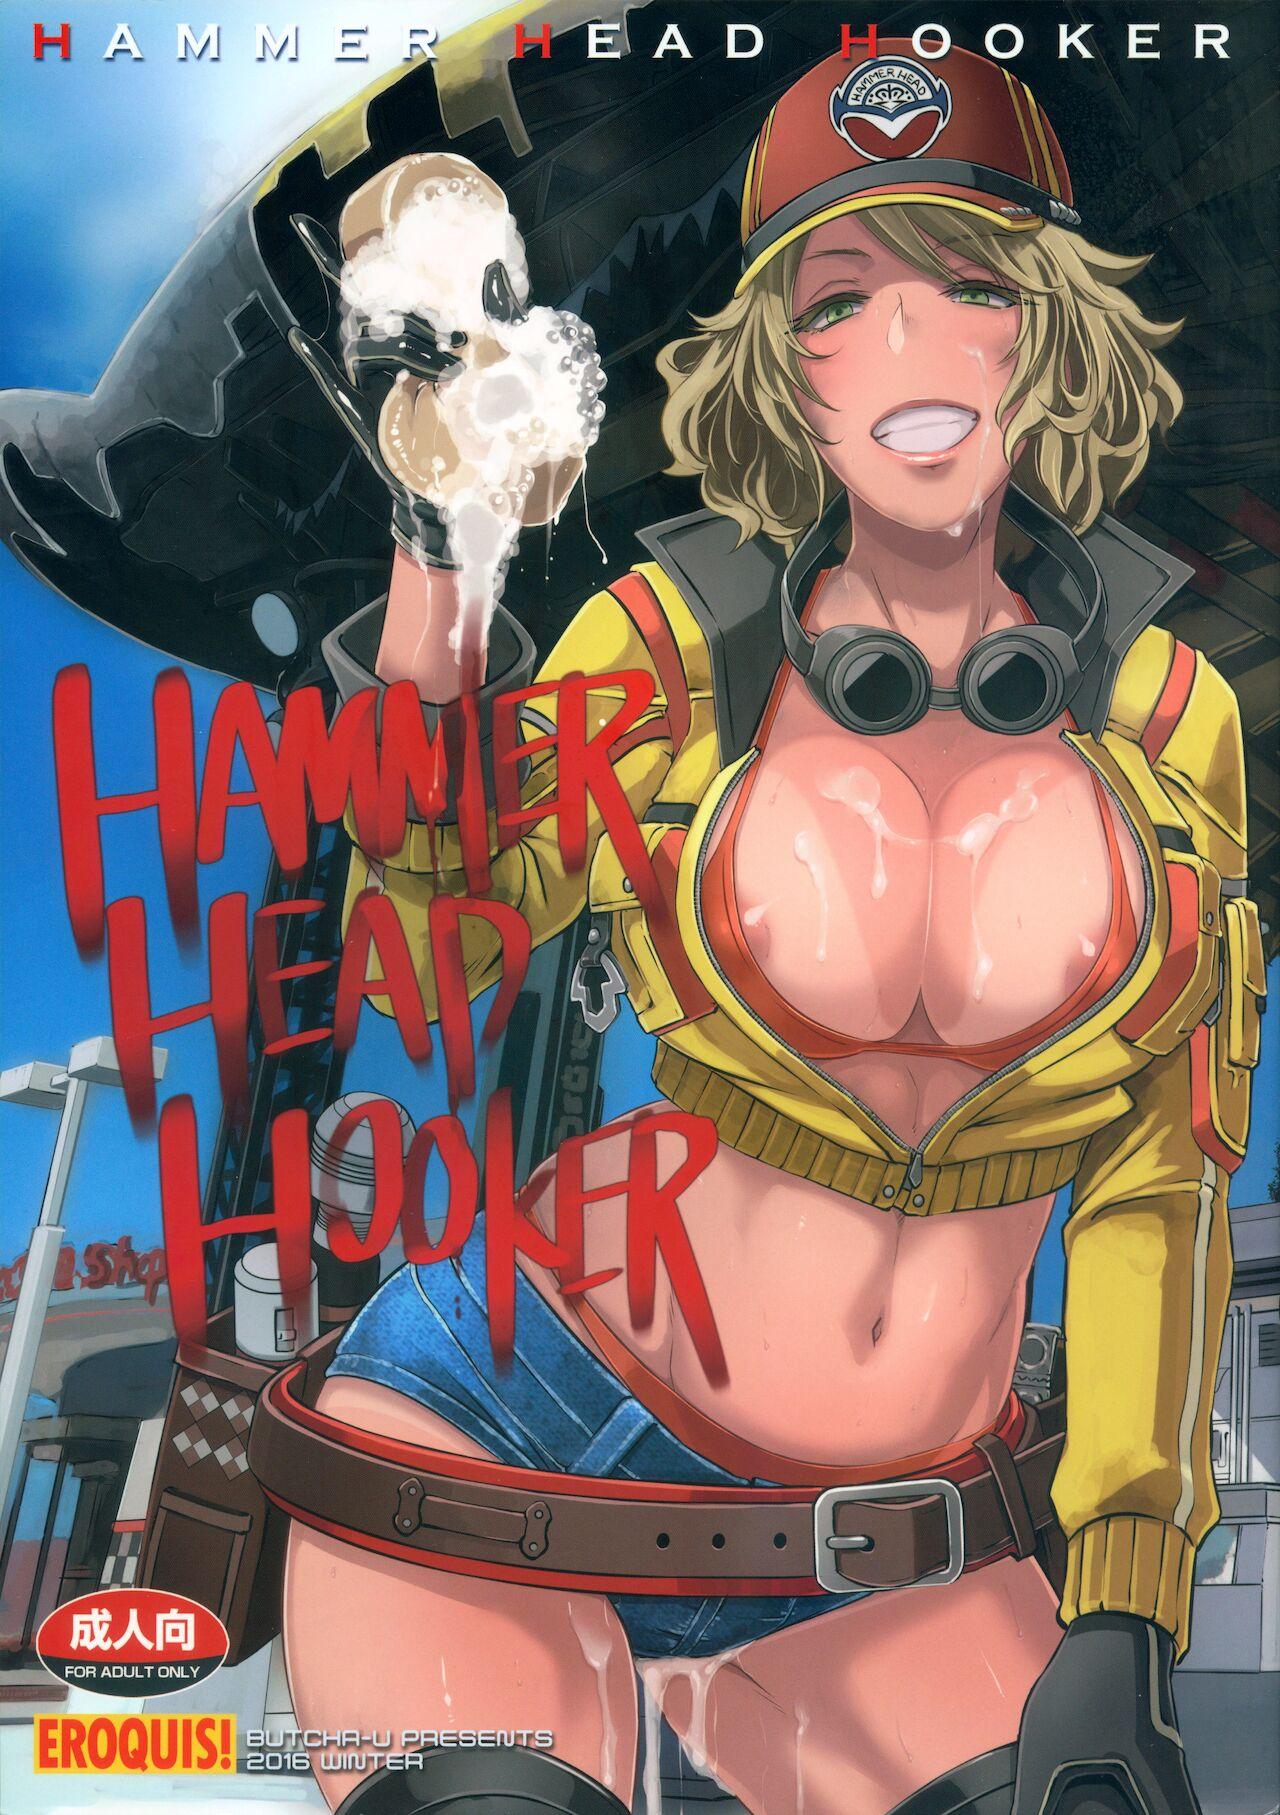 Sofa Hammer Head Hooker - Final fantasy xv Parties - Page 1